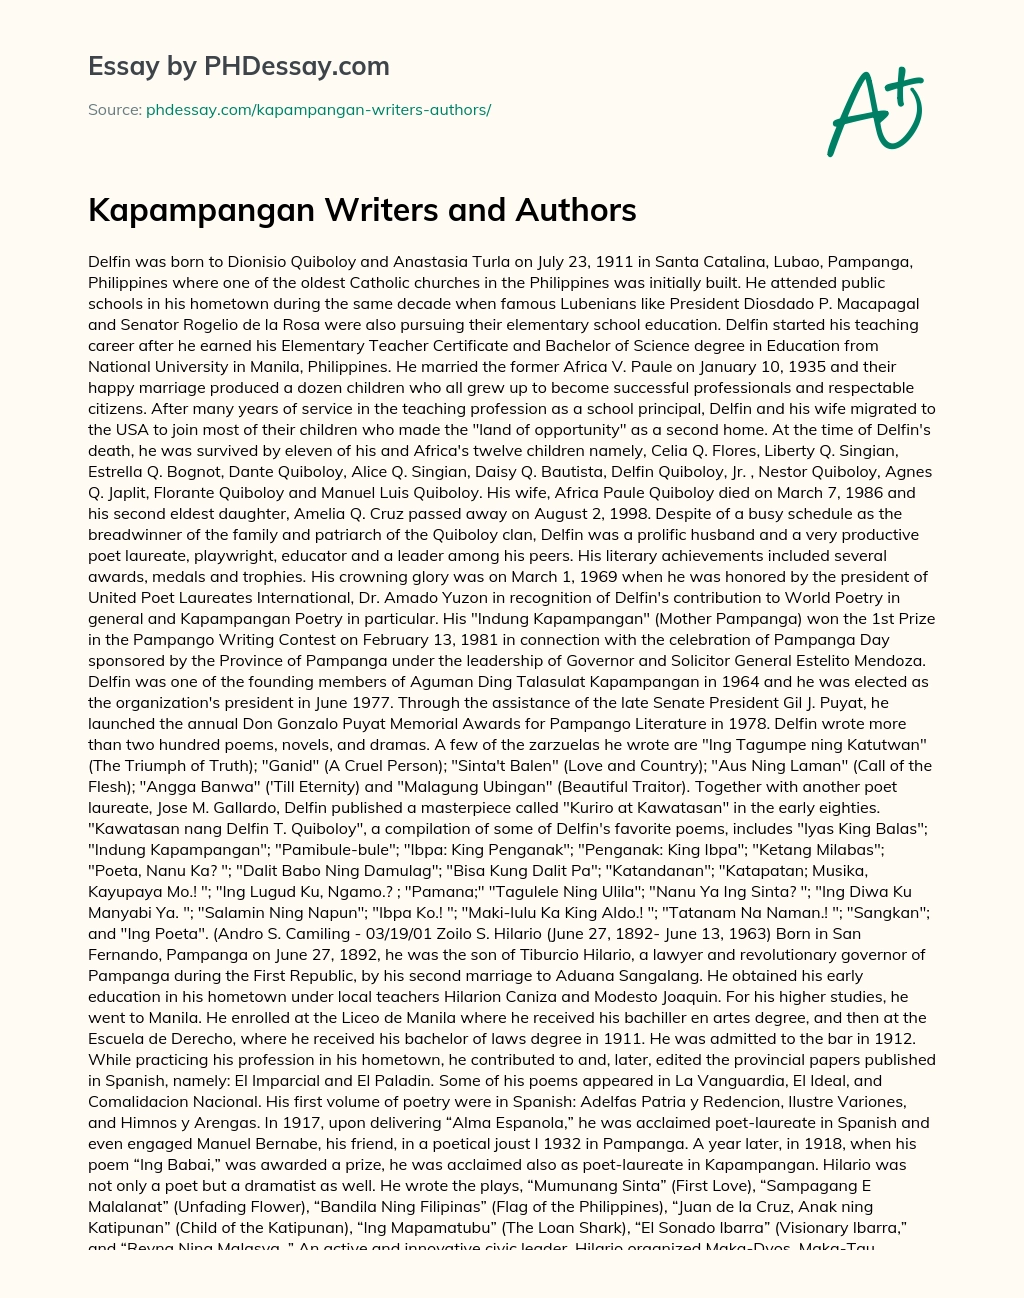 Kapampangan Writers and Authors essay